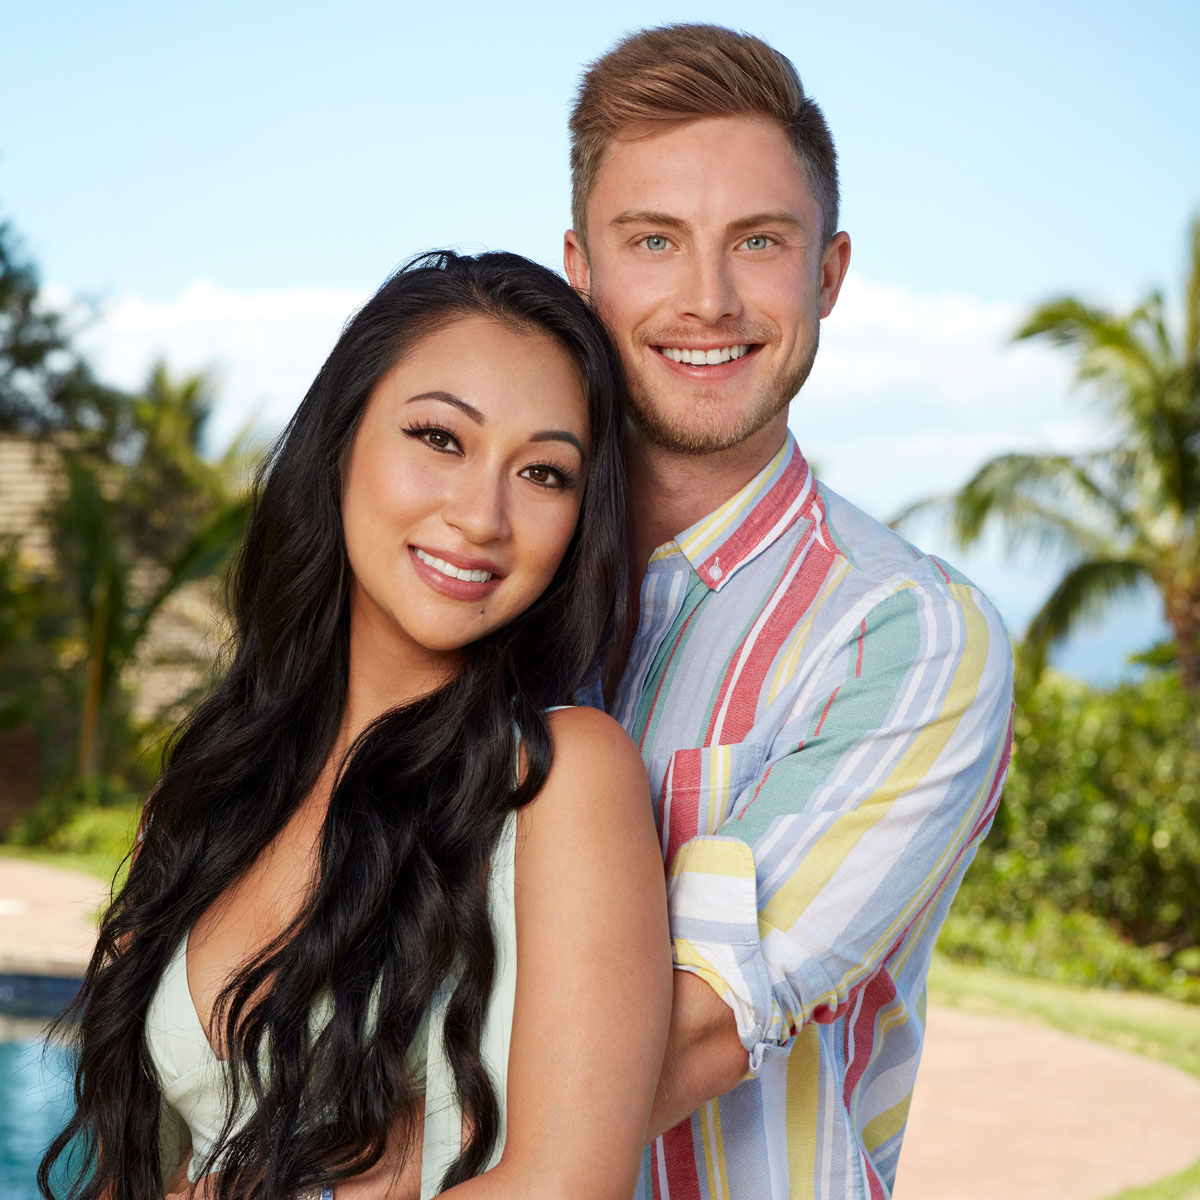 Meet the Couples & Sexy Singles of Temptation Island Season 4 - E! Online